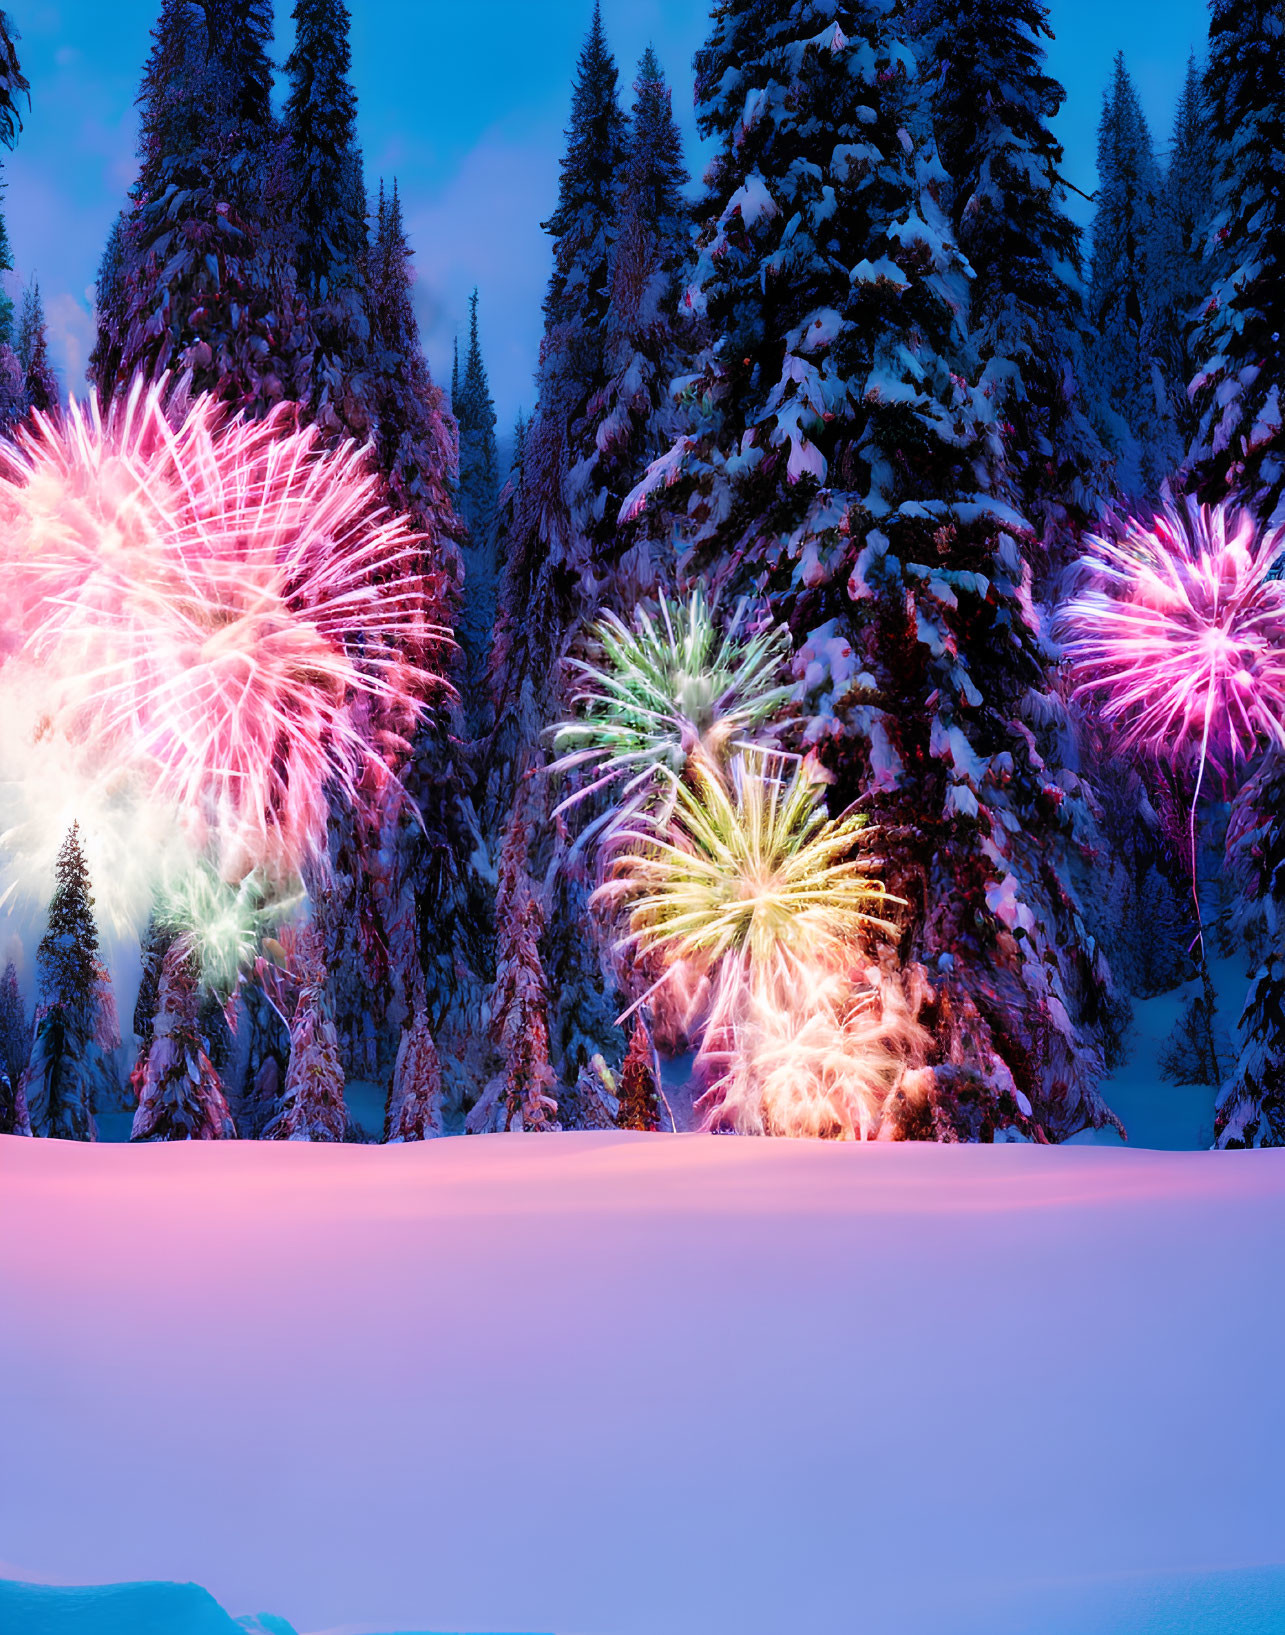 Colorful fireworks illuminate snowy pine trees in twilight sky